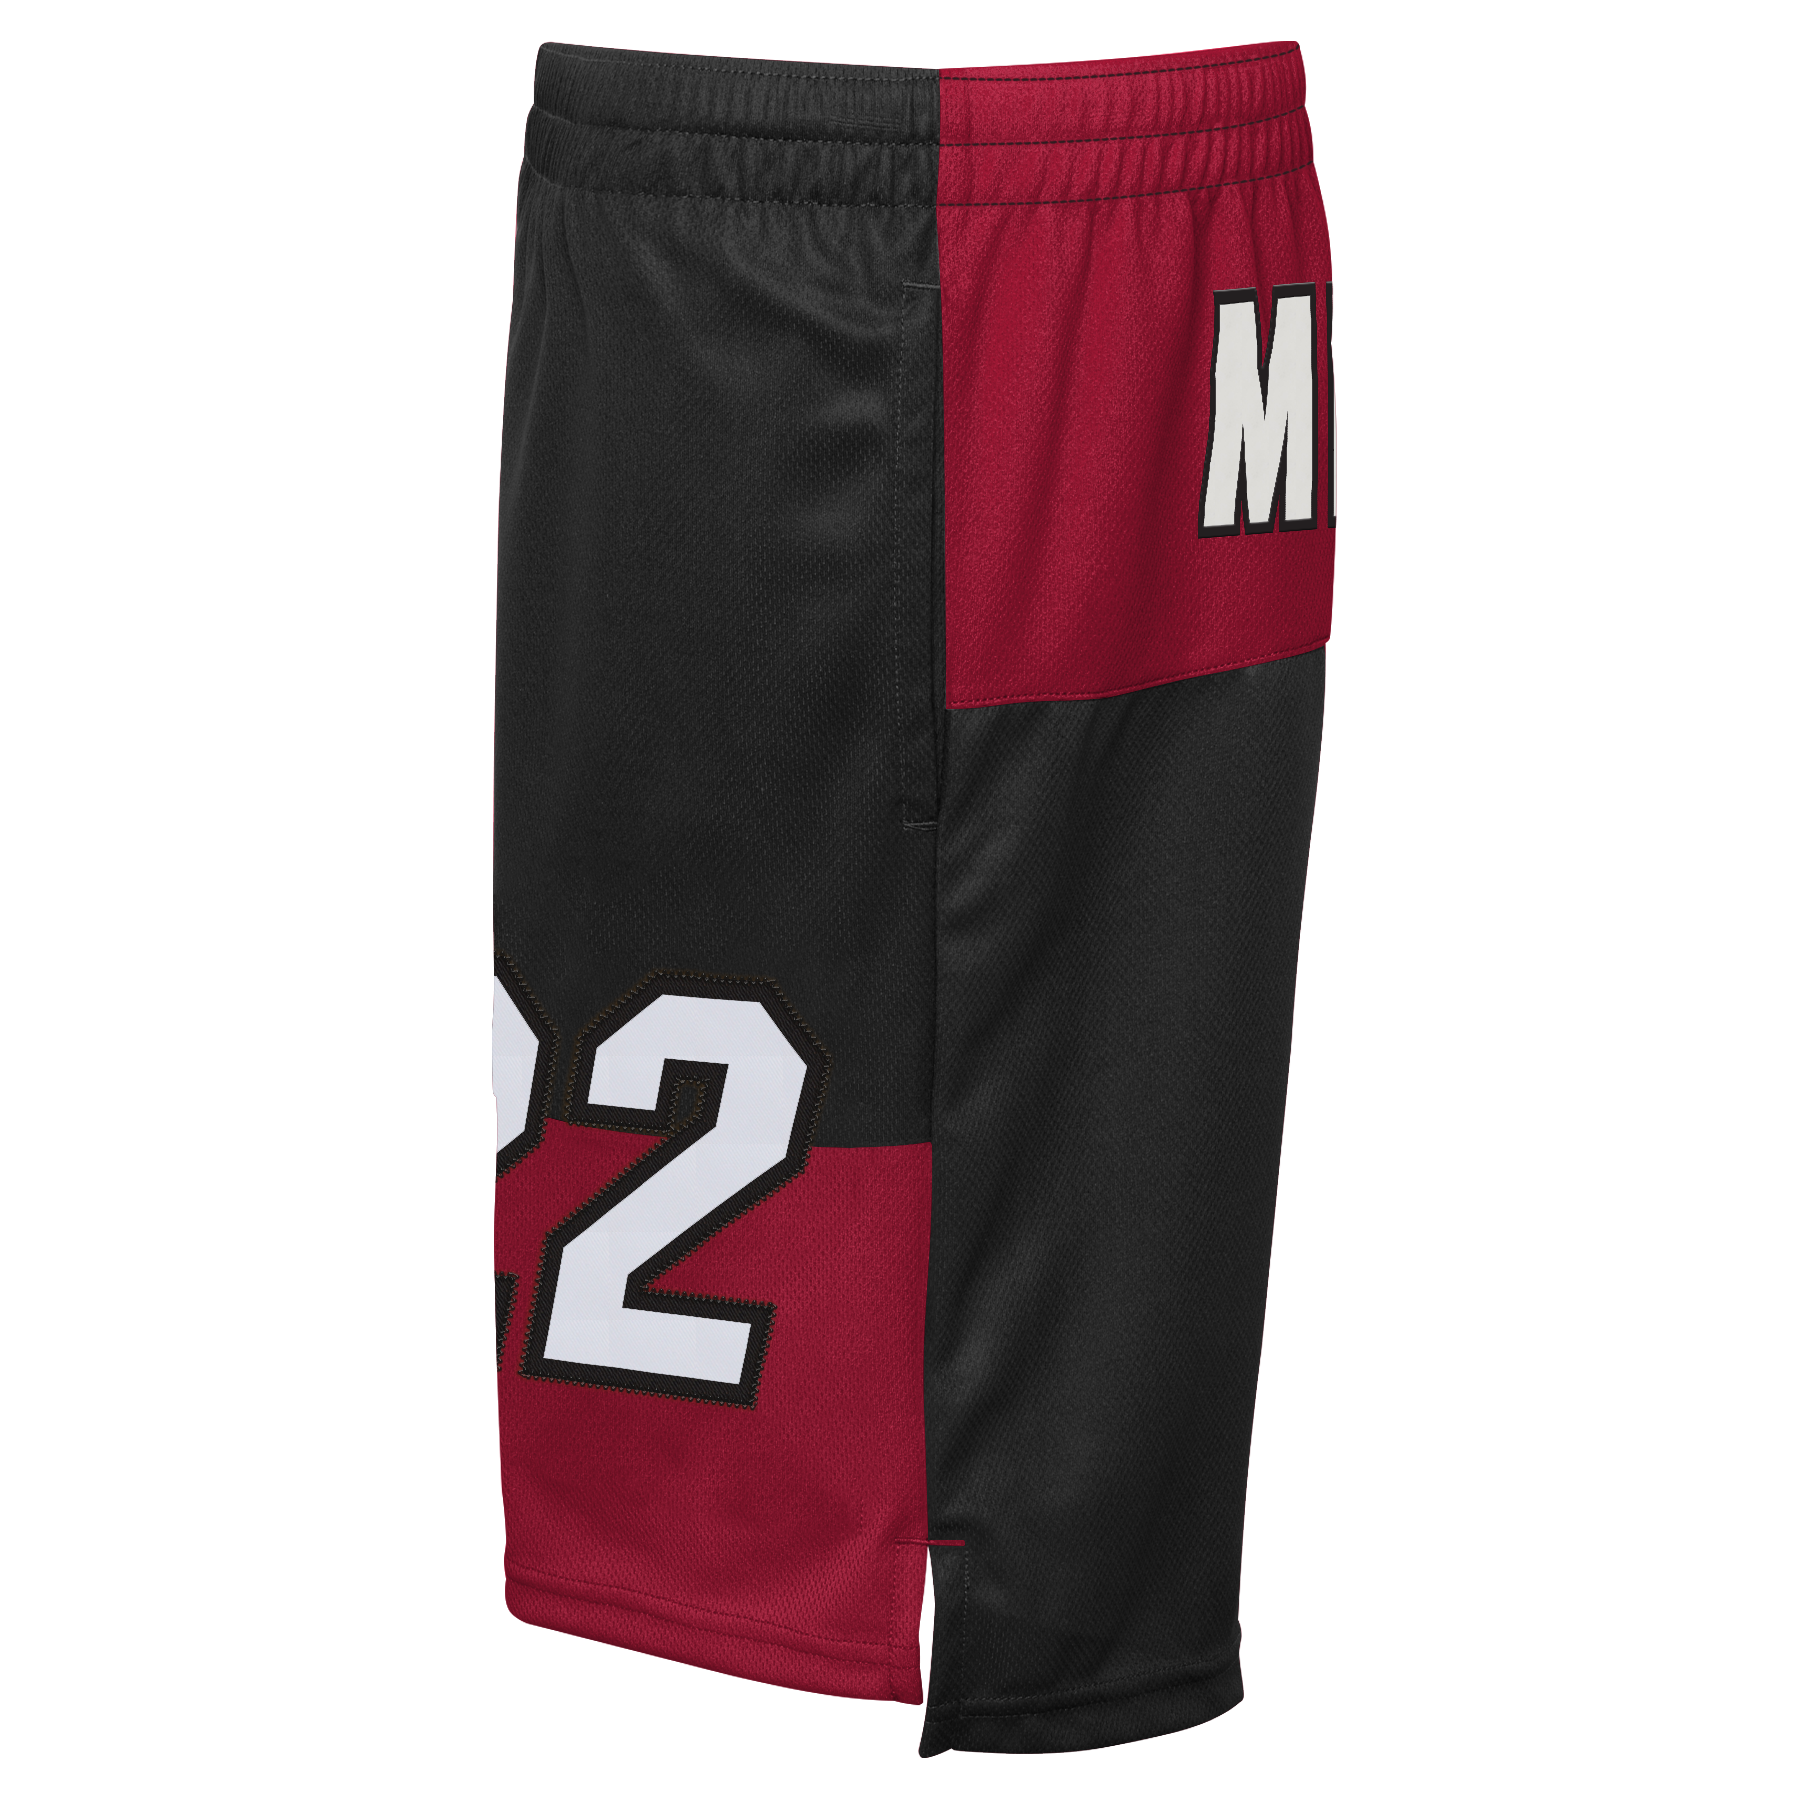 Jimmy Butler Miami Heat Ultra Game NBA Basketball Shorts Size